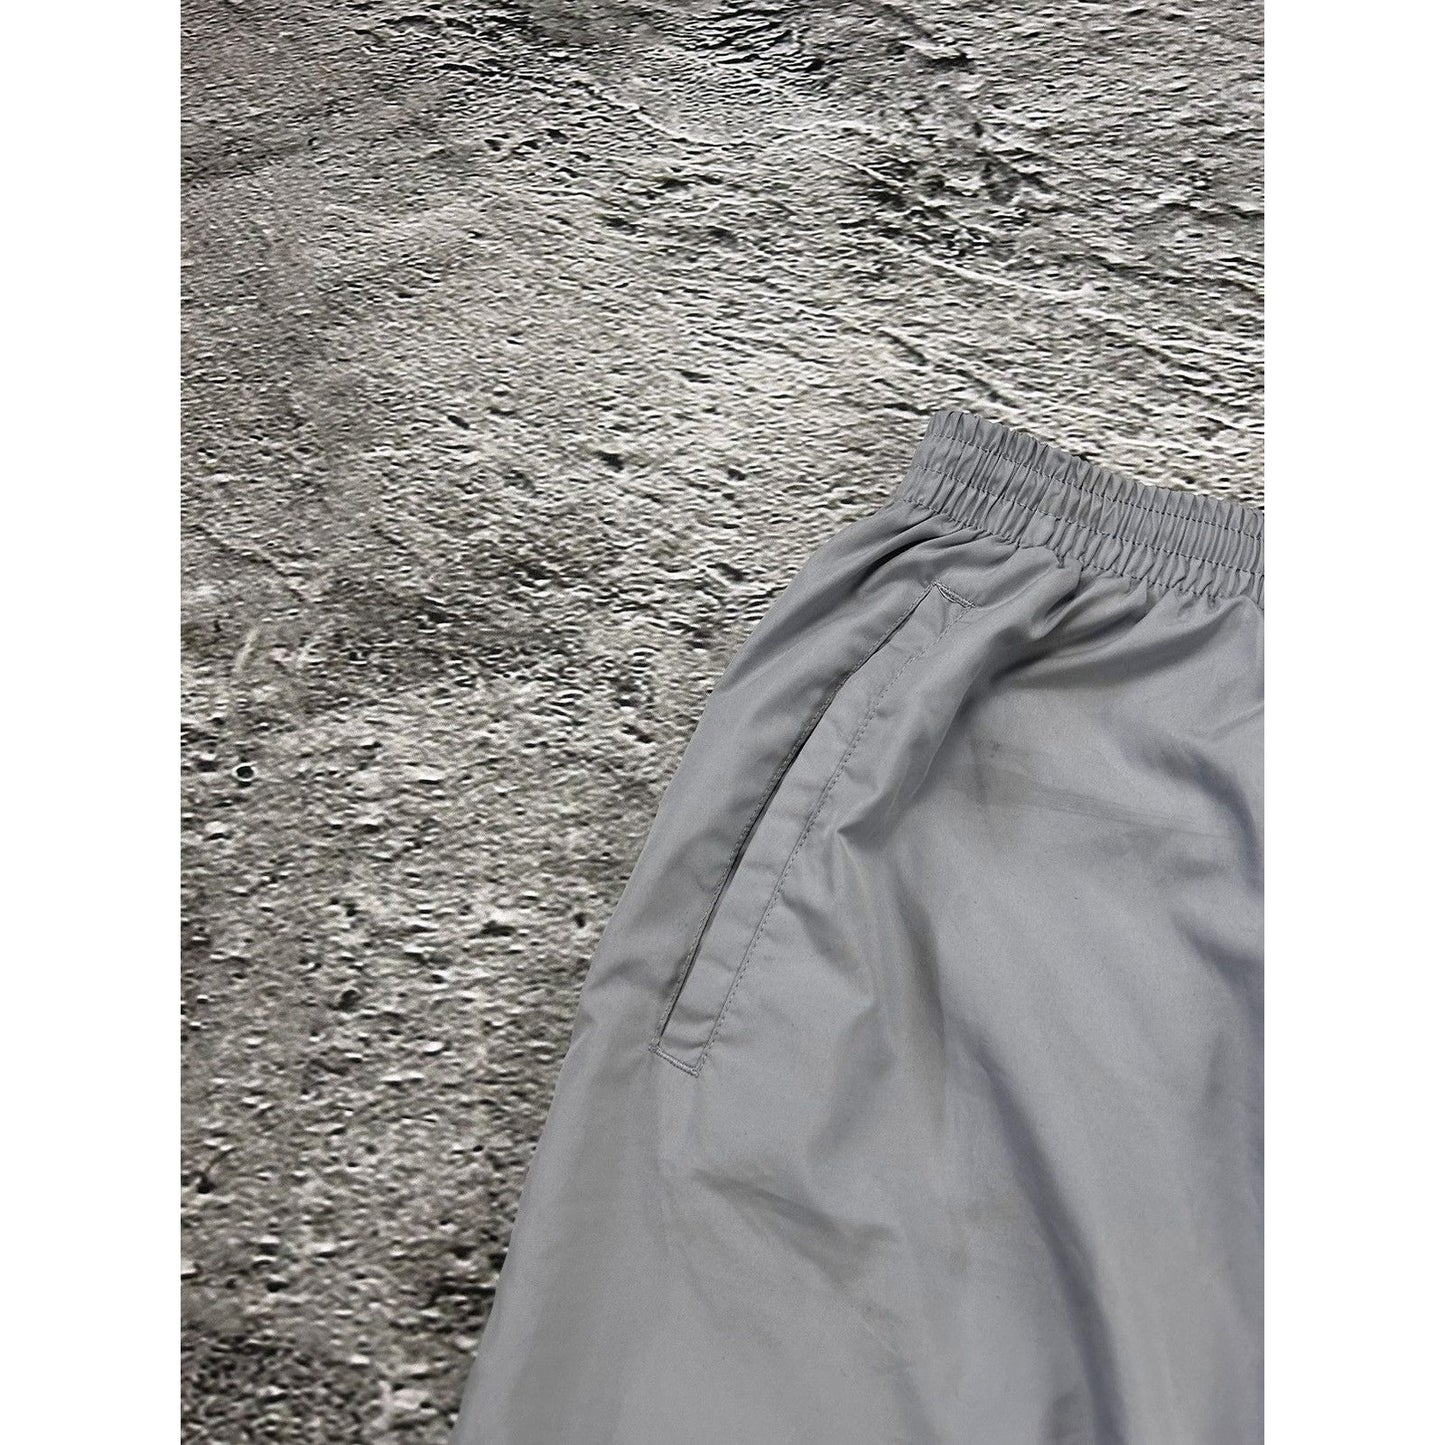 Reebok nylon track pants parachute grey Y2K UK flag